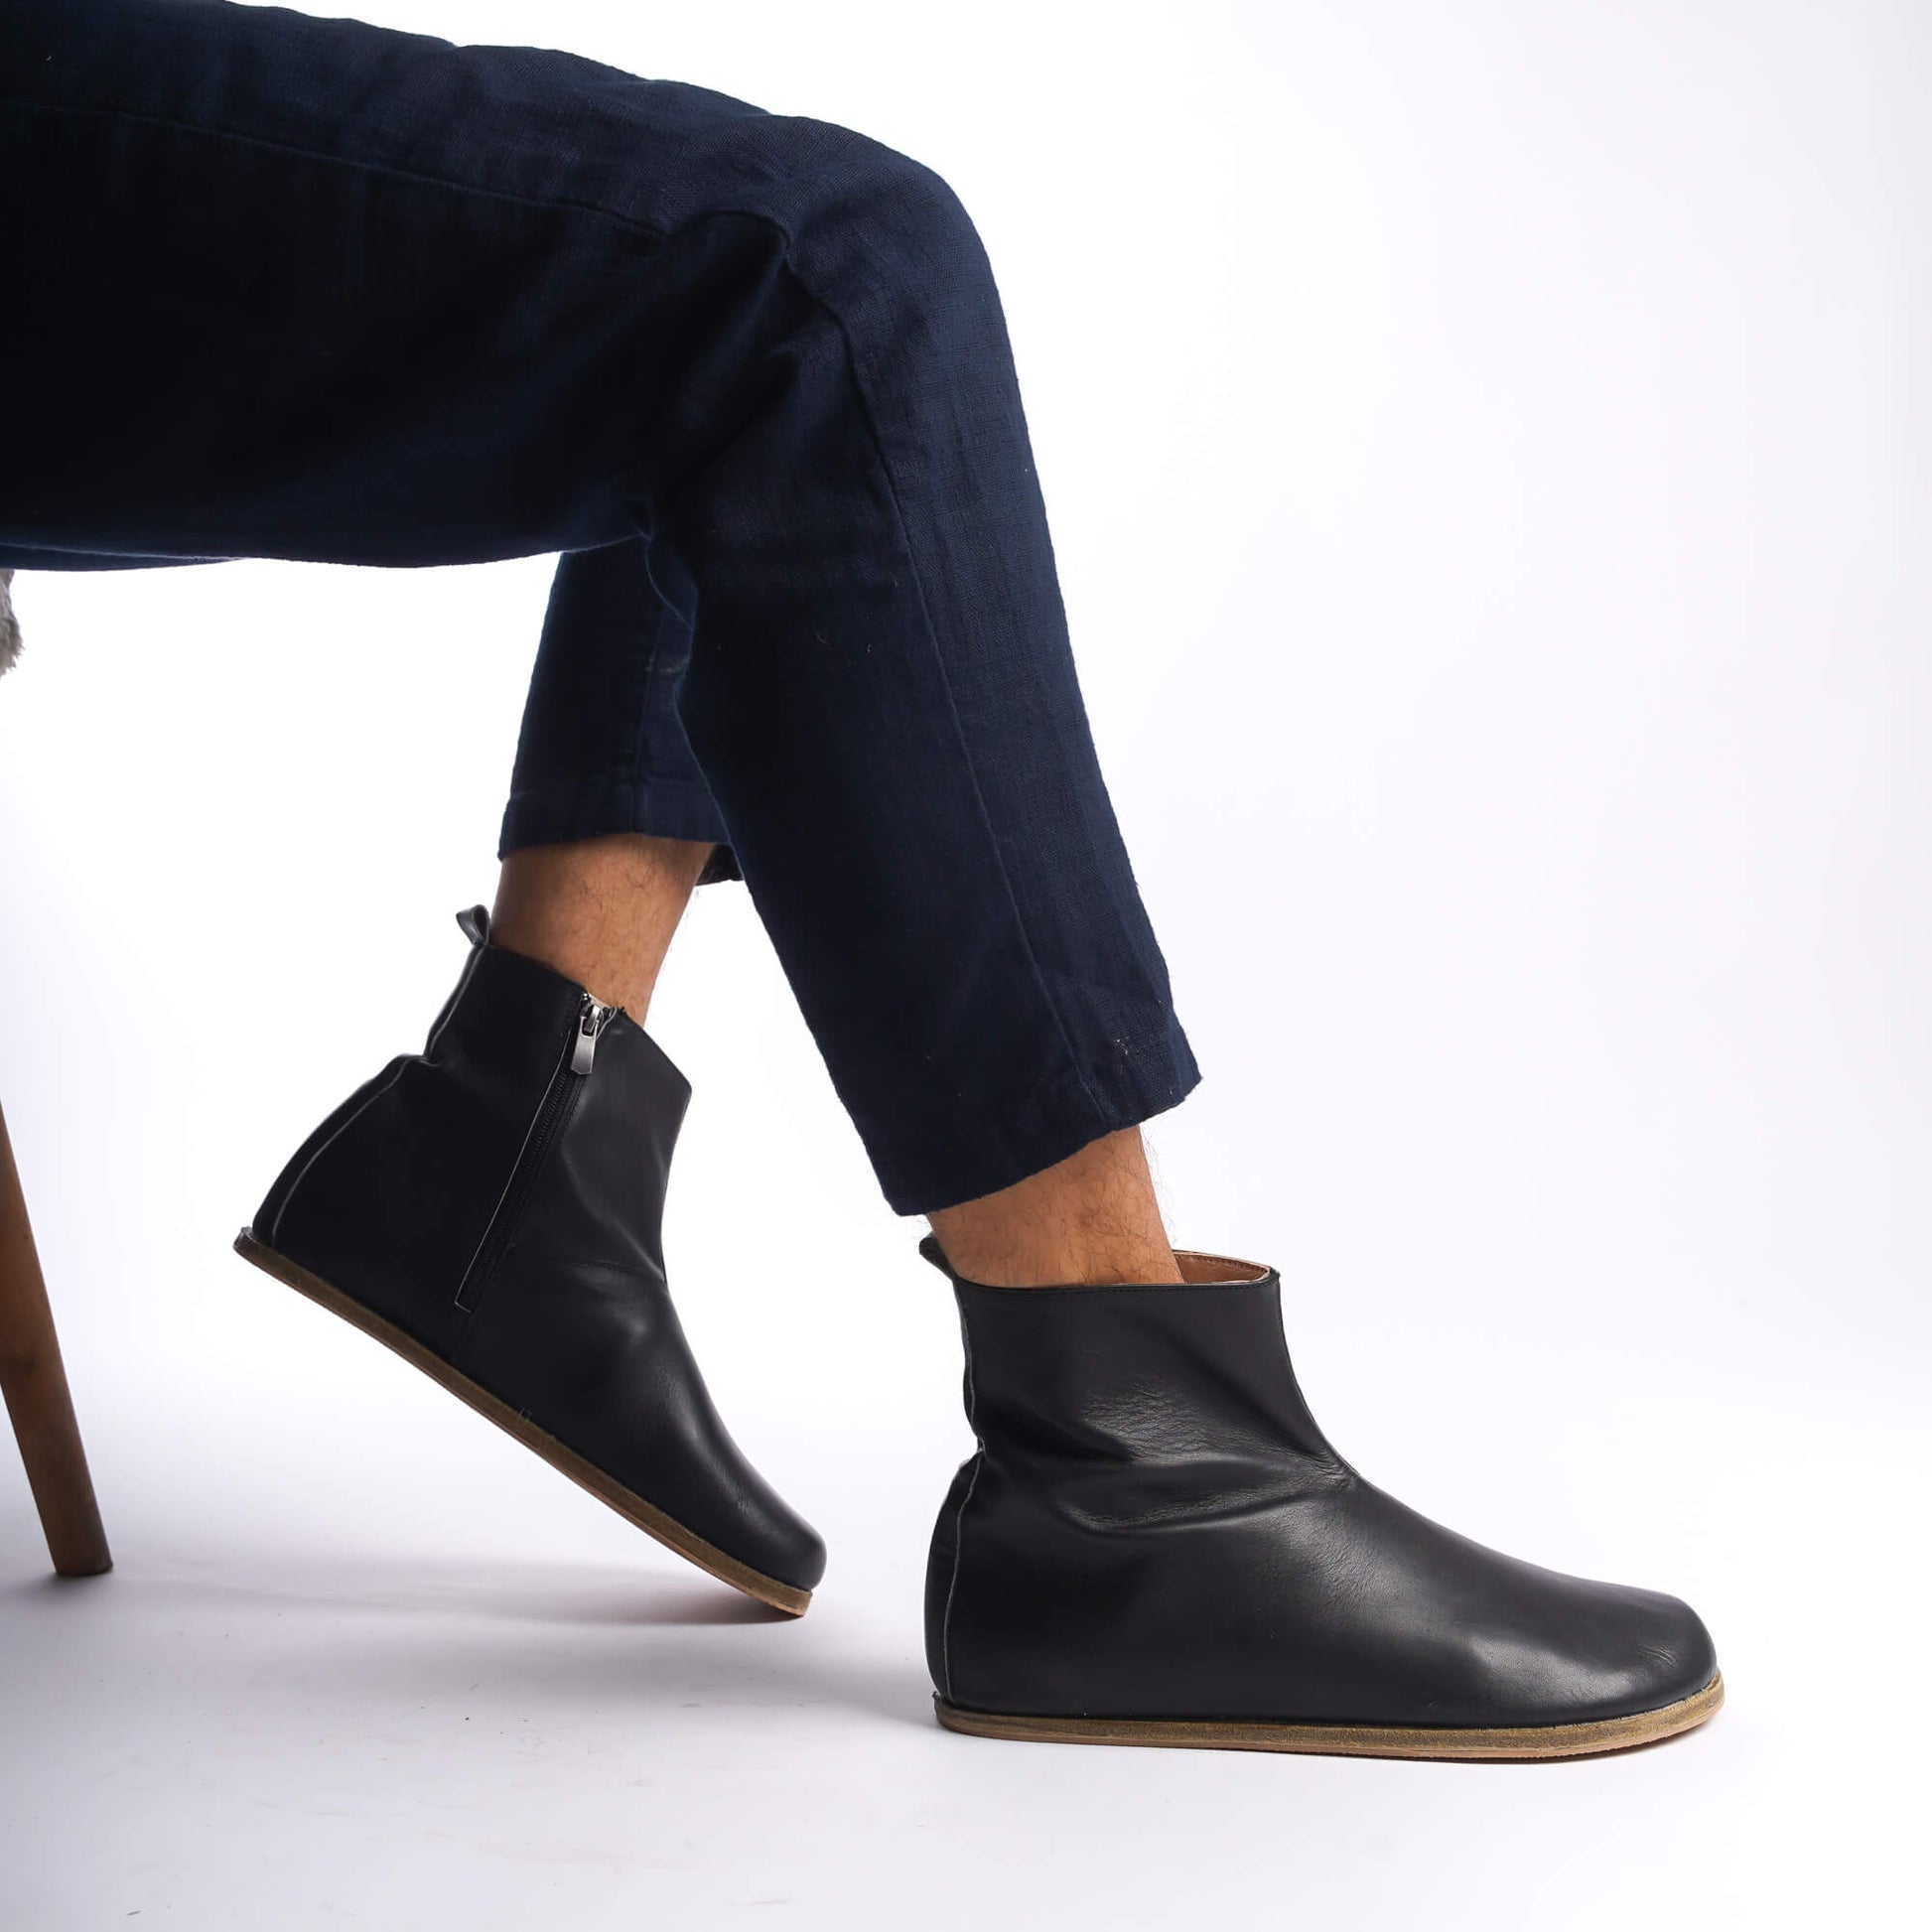 Men's black genuine leather barefoot ankle boots, designed with a sleek side zipper for effortless wear.